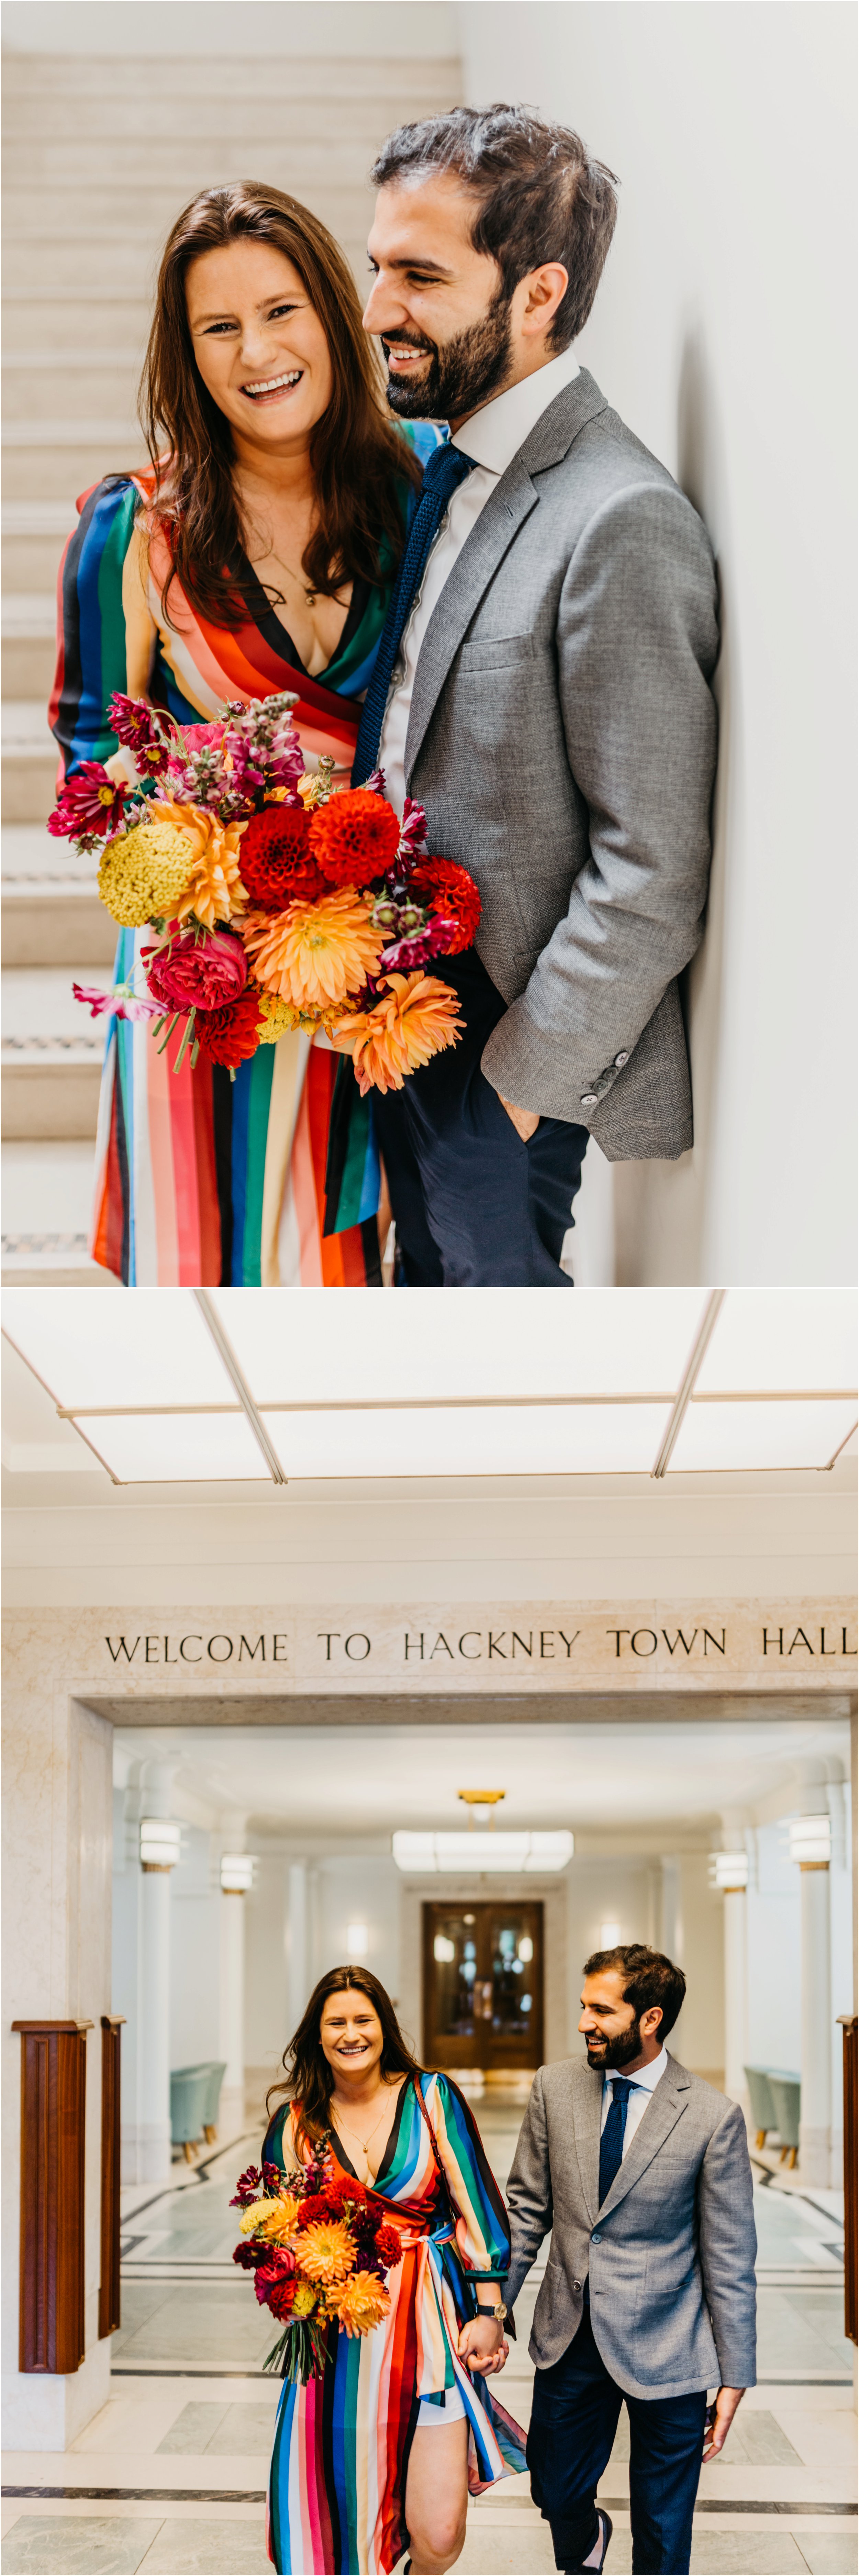 Hackney Town Hall London wedding photographer_0012.jpg